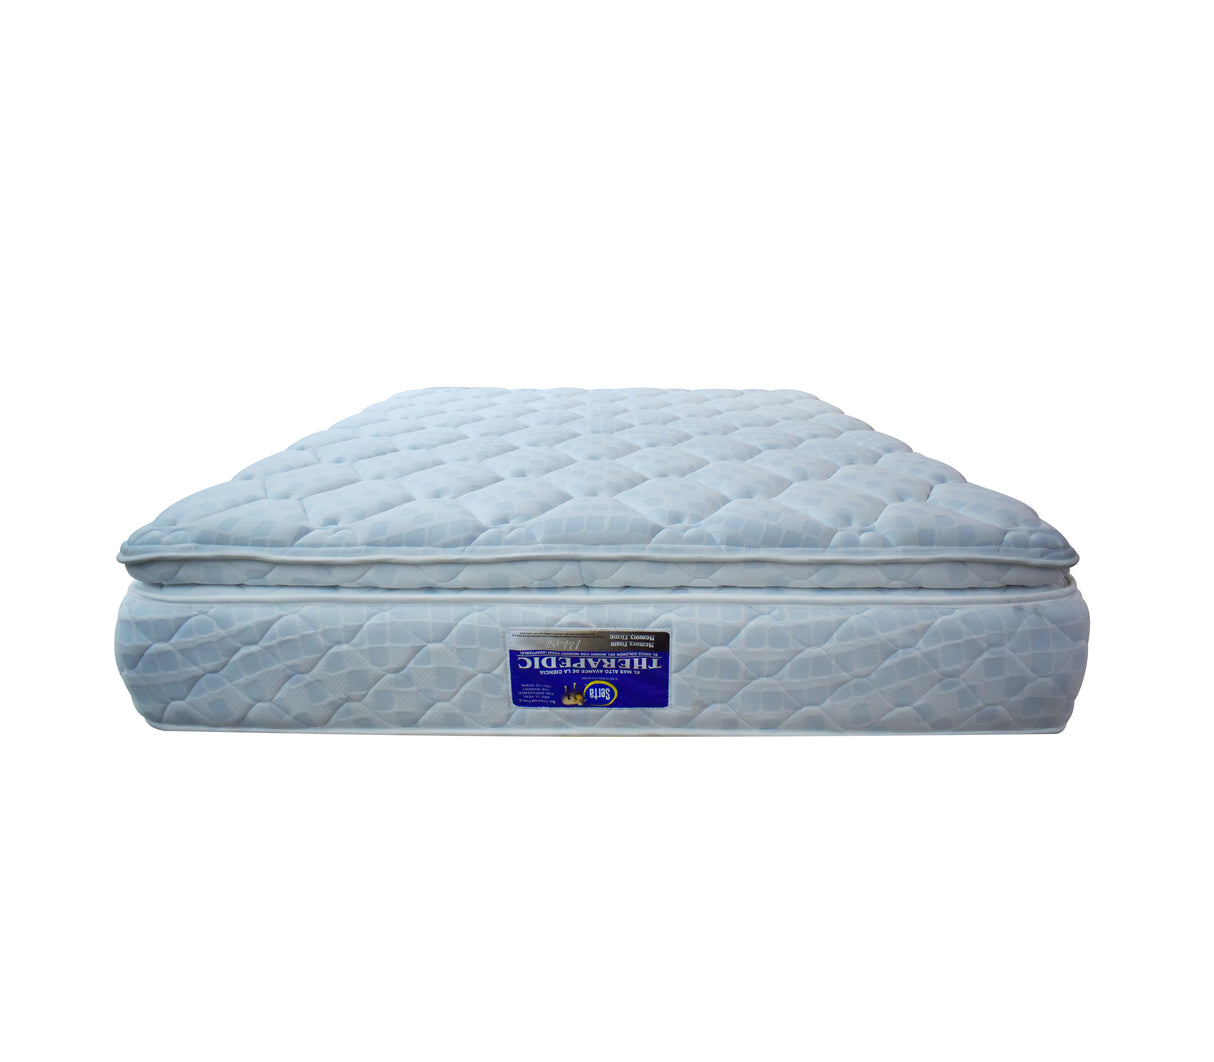 Colchón Individual (100cm X 190cm) Therapedic Ortopédico 1 Pillow Memory Foam Encapsulado Serta